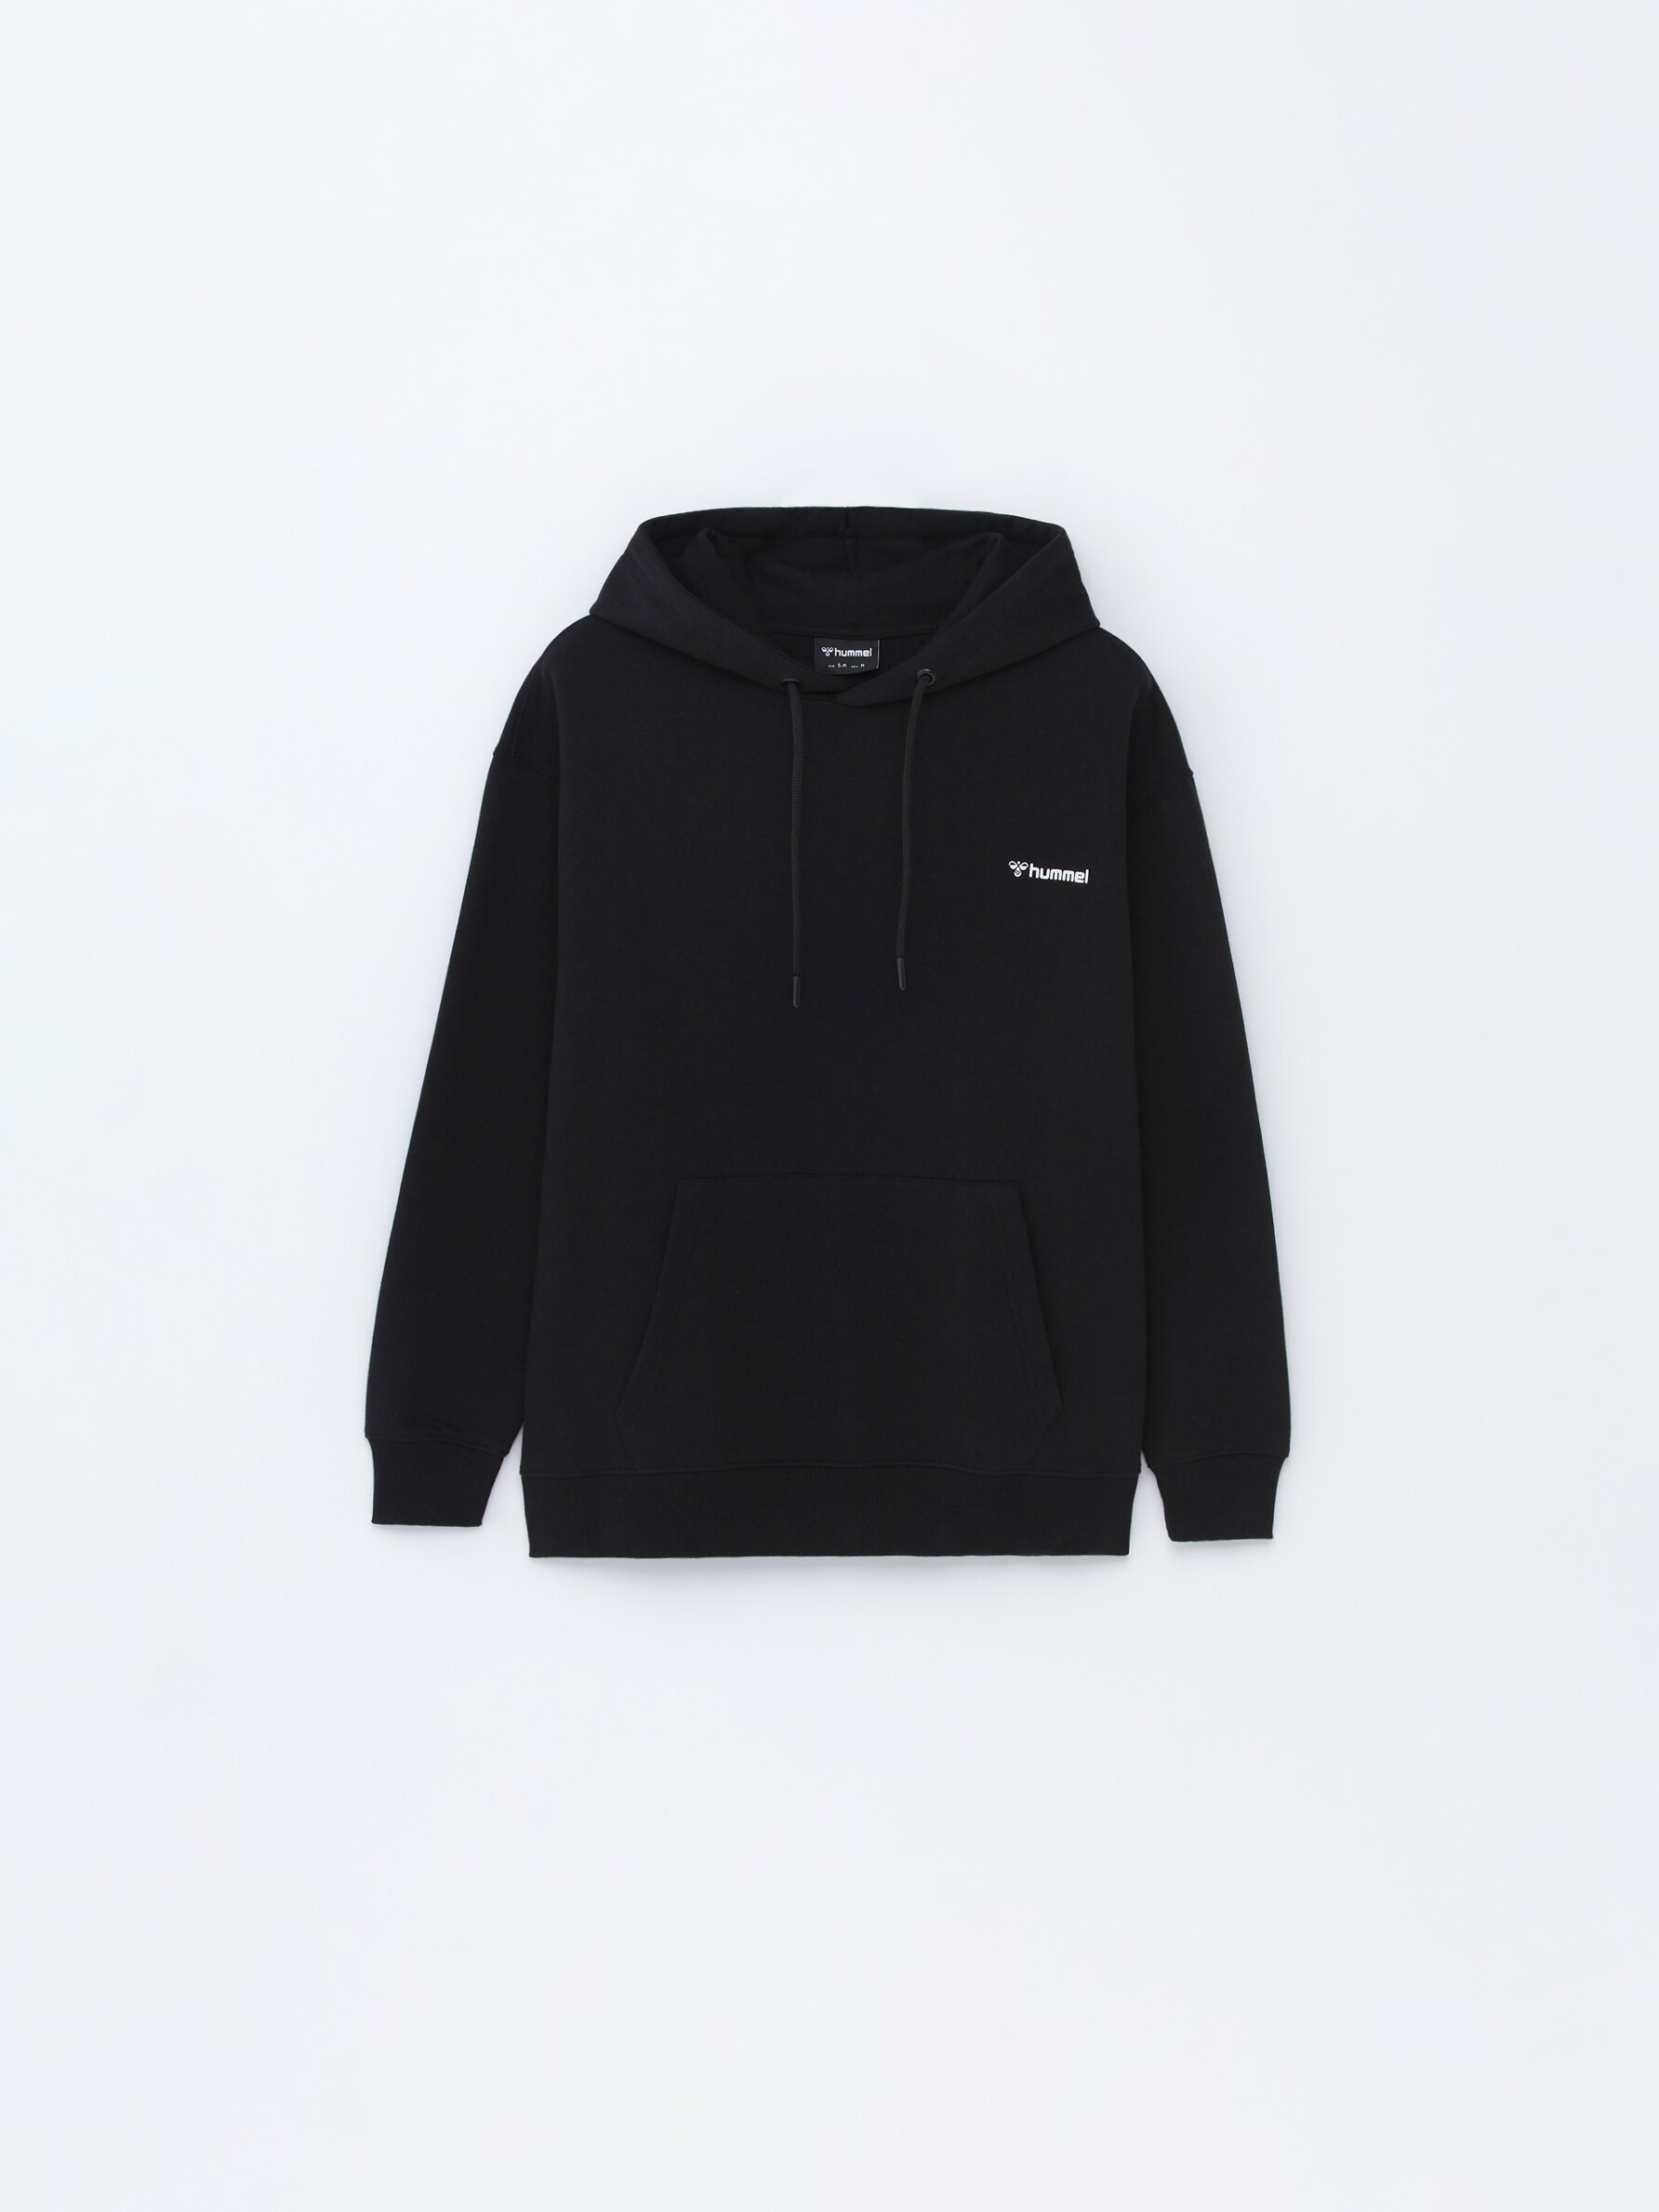 Hummel x Turkey CLOTHING hoodie Lefties - Collaborations - | TEEN - Lefties BOY - Man 